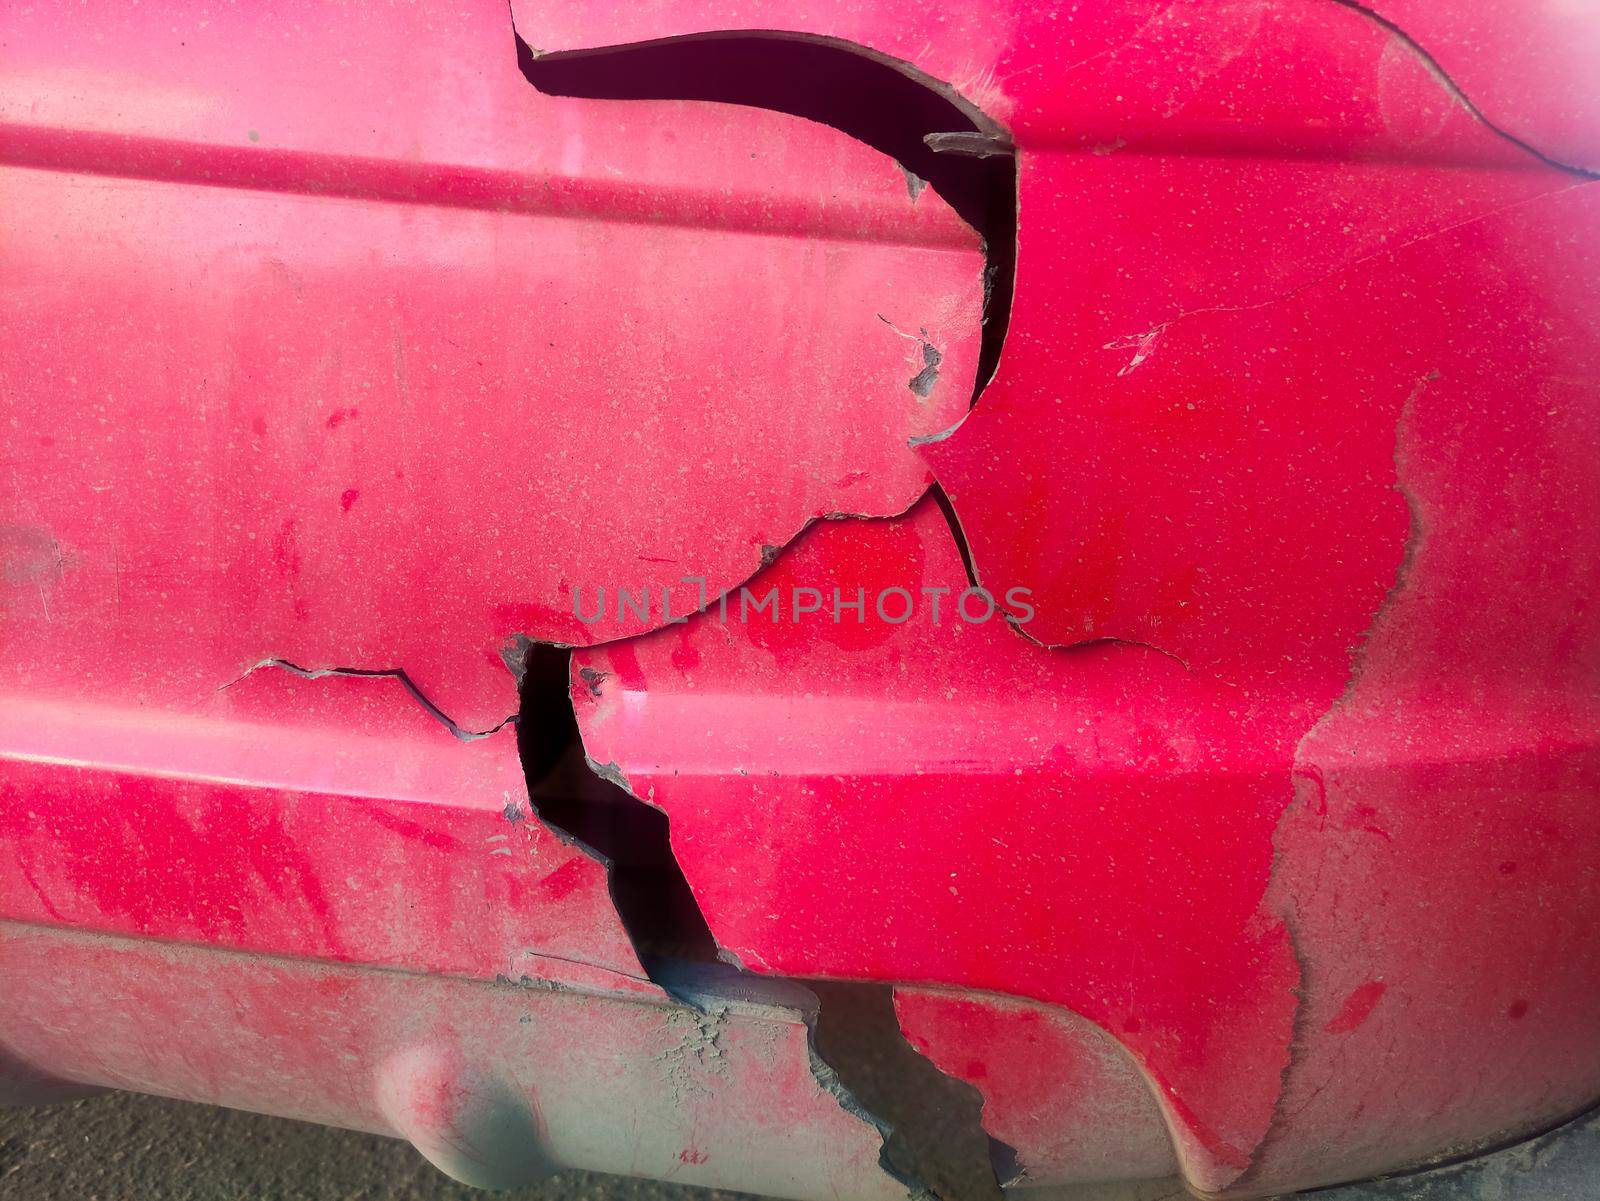 Red broken car detail. Damaged old car close up. High quality photo